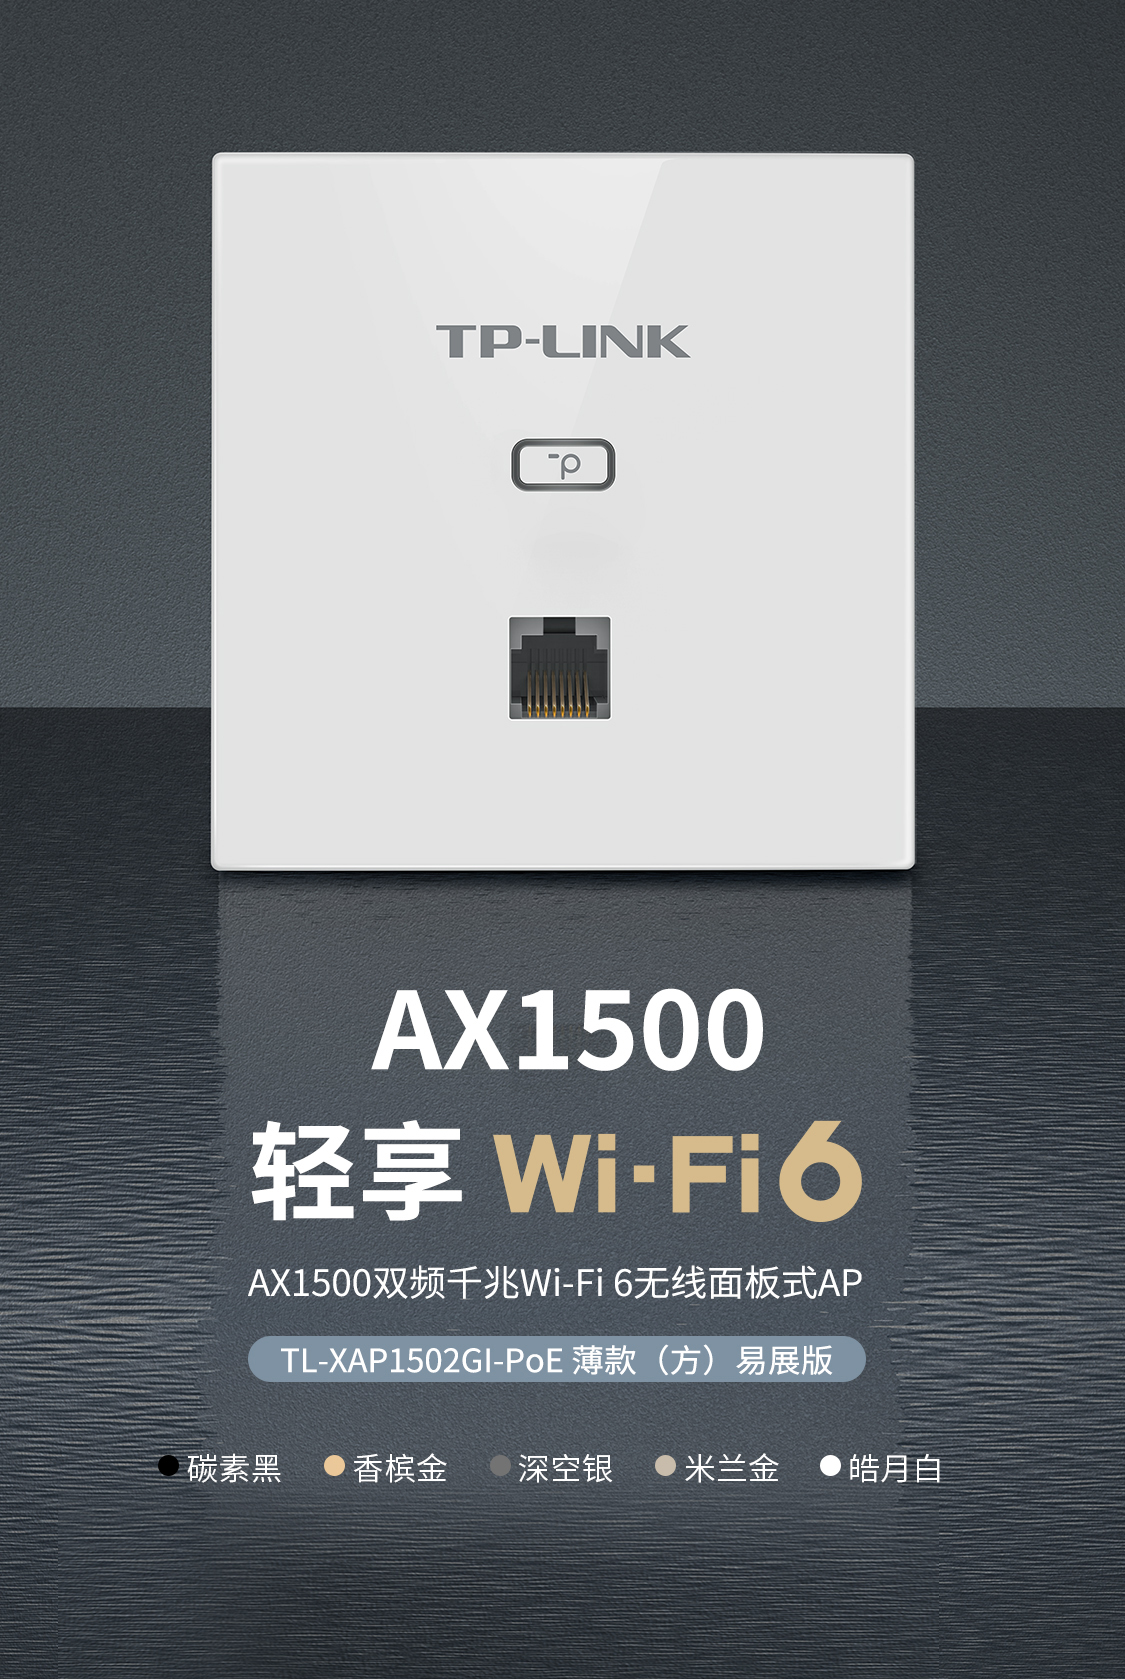 TL-XAP1502GI-PoE 薄款深空银（方）易展版- AX1500双频千兆Wi-Fi 6无线 